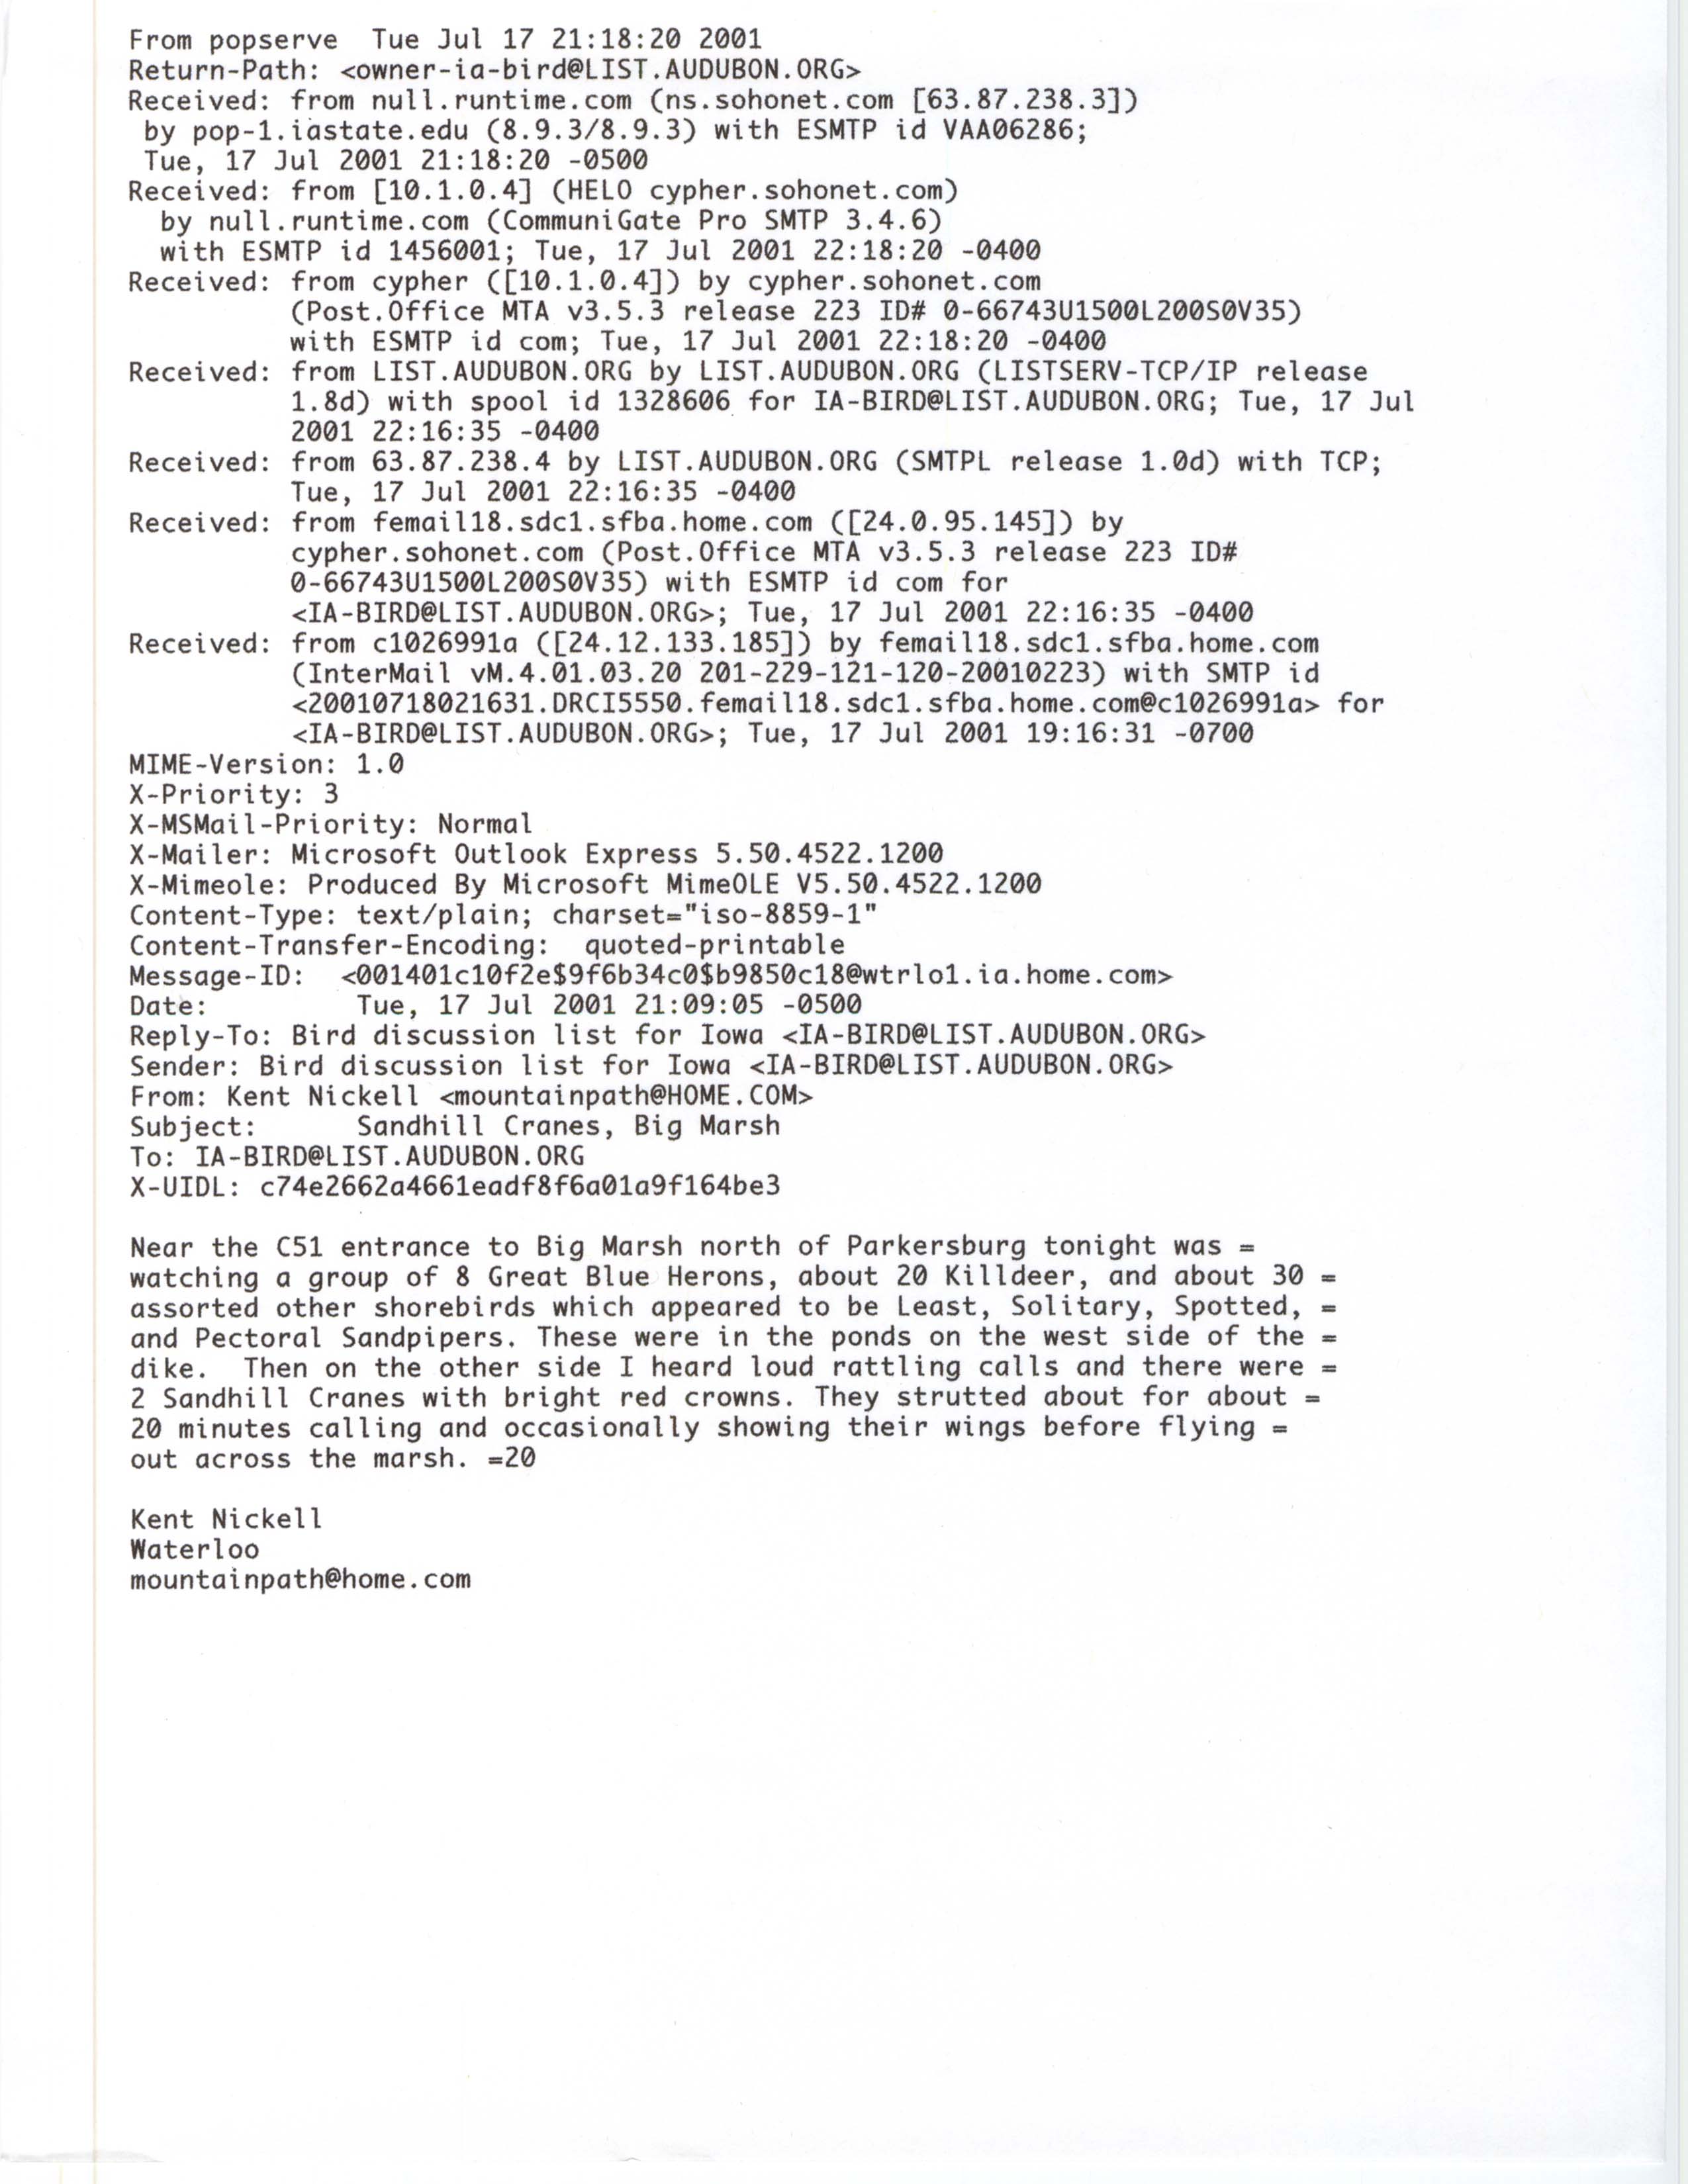 Kent Nickell email to IA-BIRDS mailing list regarding bird sightings, July 17, 2001